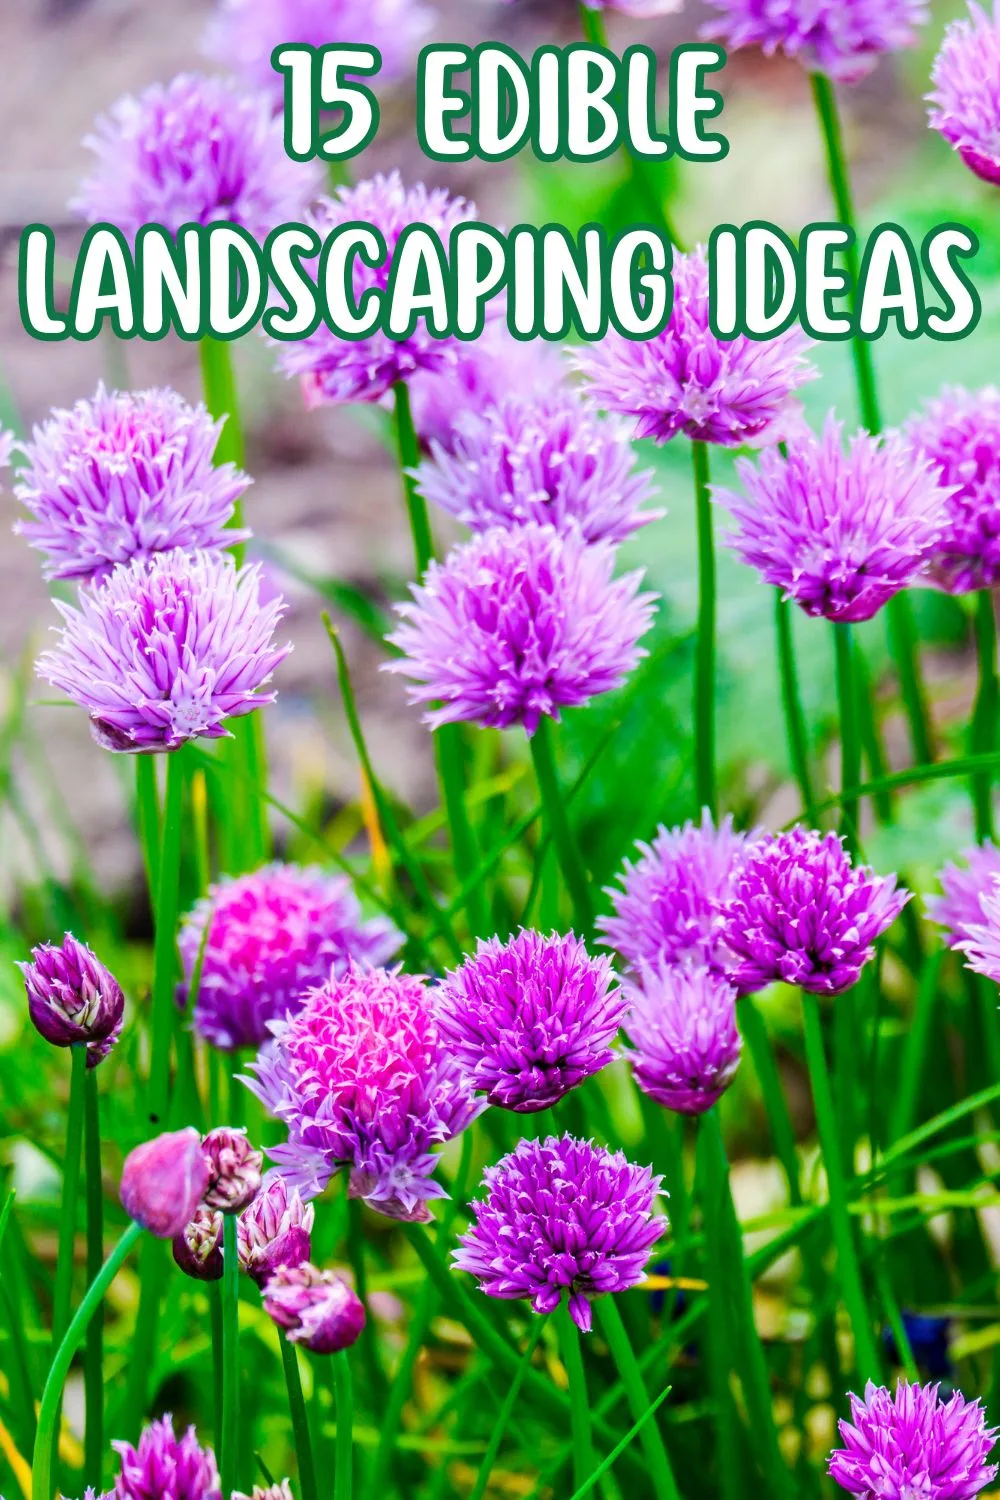 15 Edible landscaping ideas.